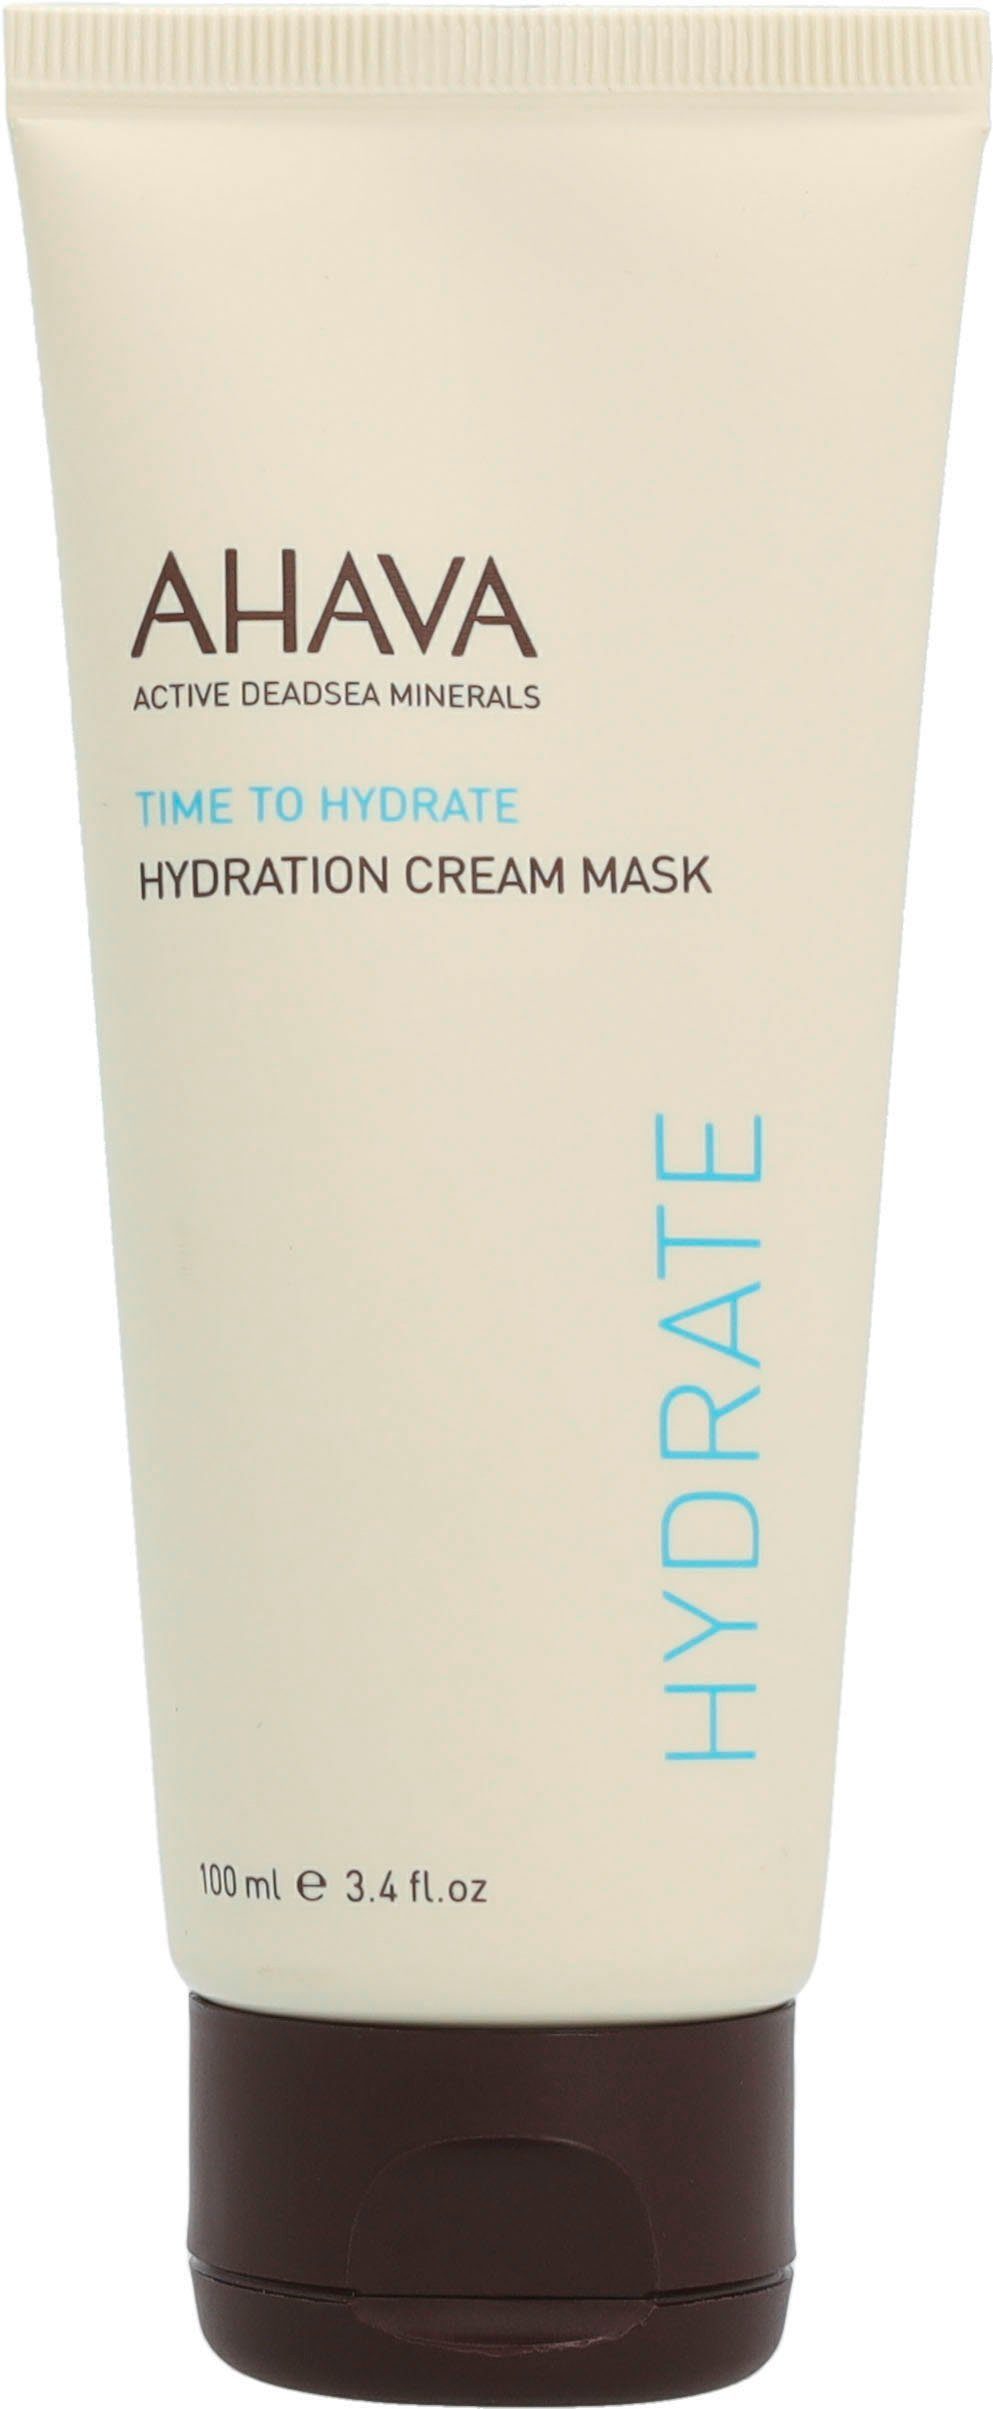 AHAVA Gesichtsmaske Time To Hydrate Hydration Cream Mask | Gesichtsmasken